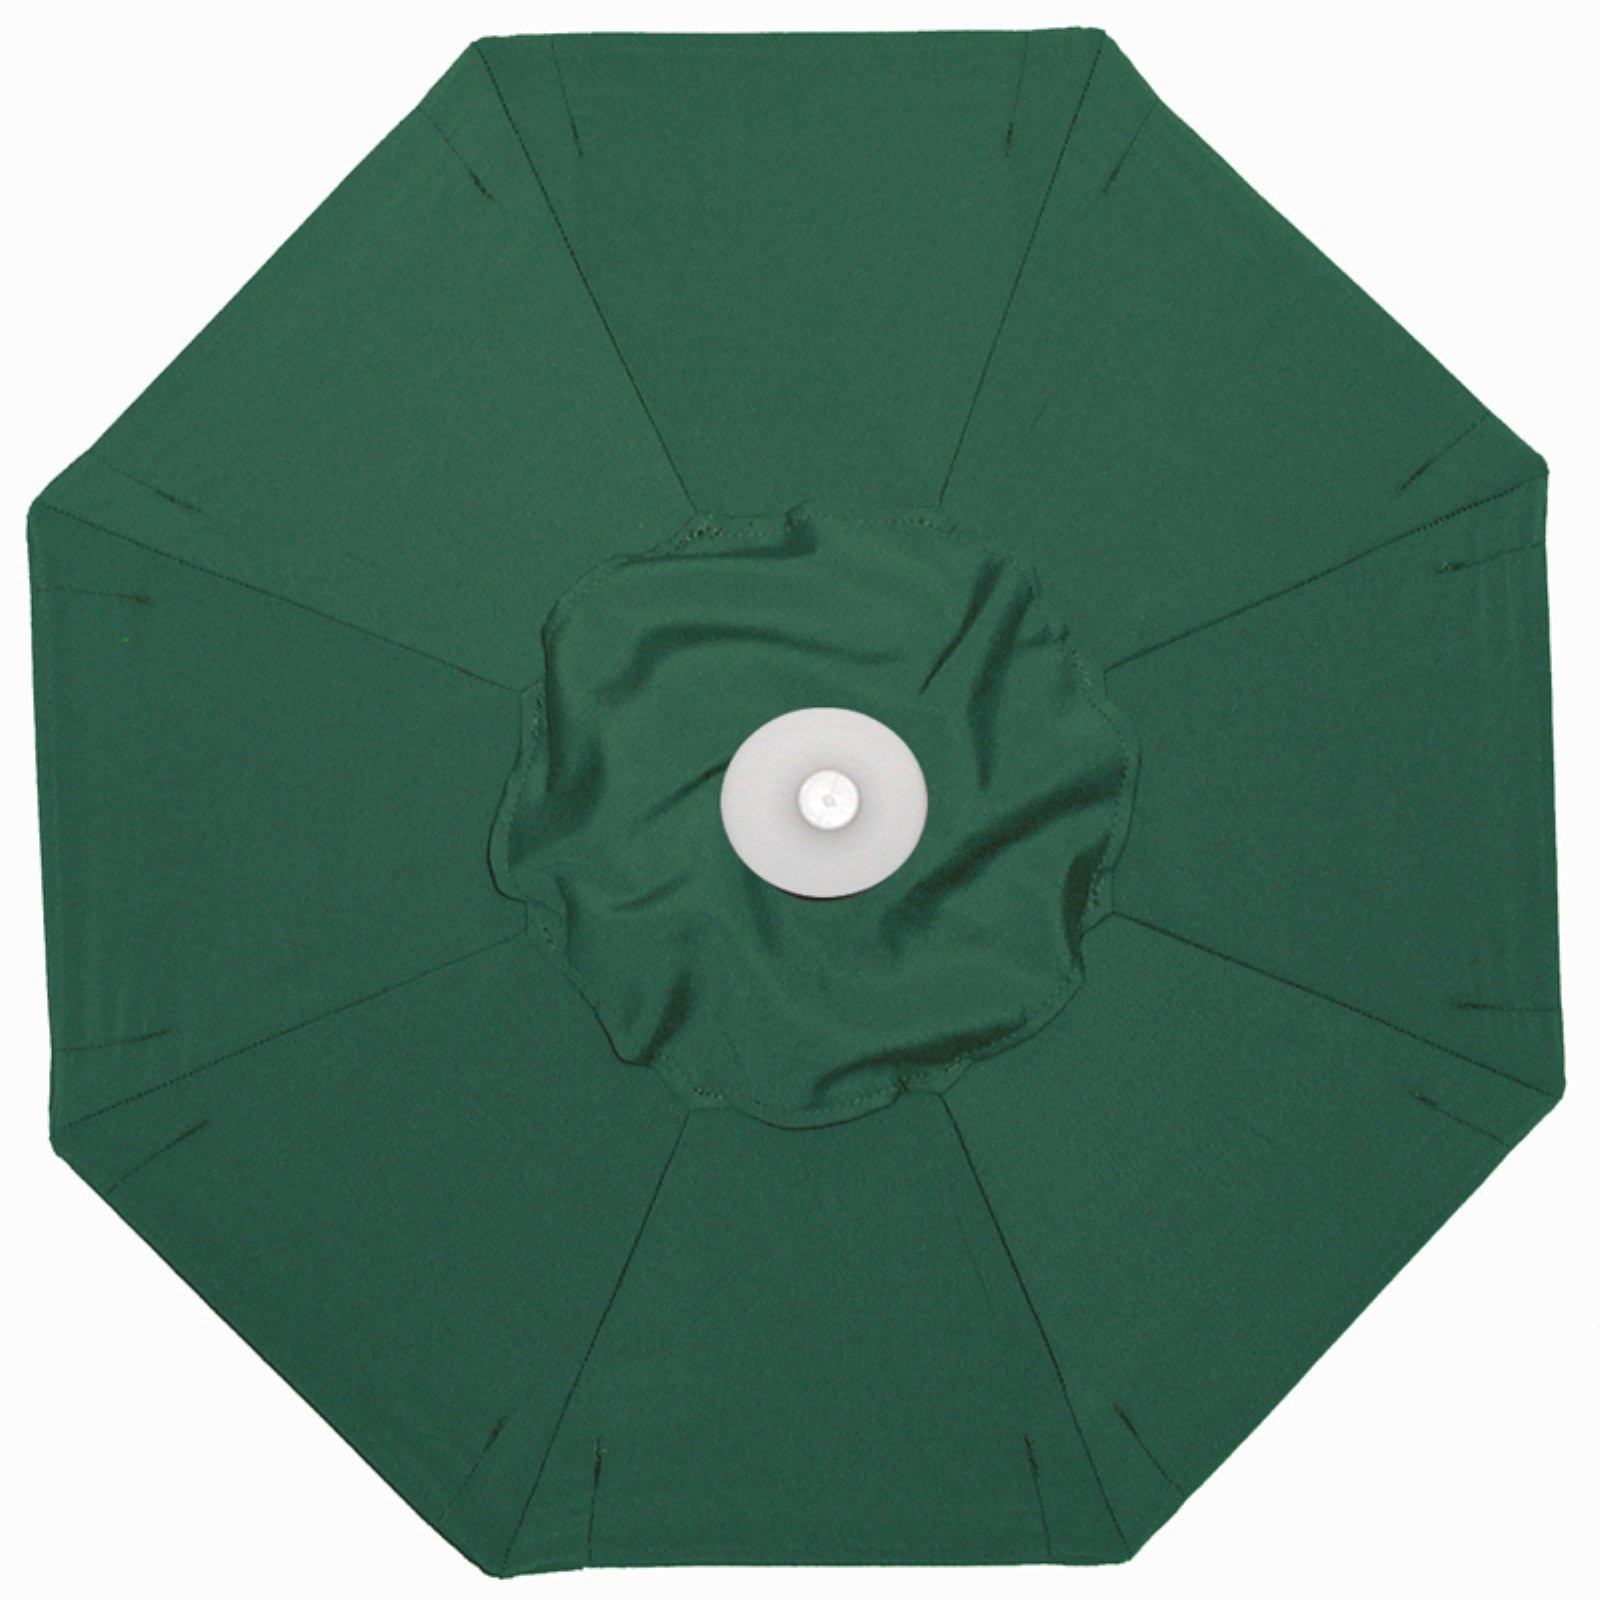 Galtech 3.5 x 7 ft. Sunrella Half-Wall Aluminum Umbrella - image 1 of 7